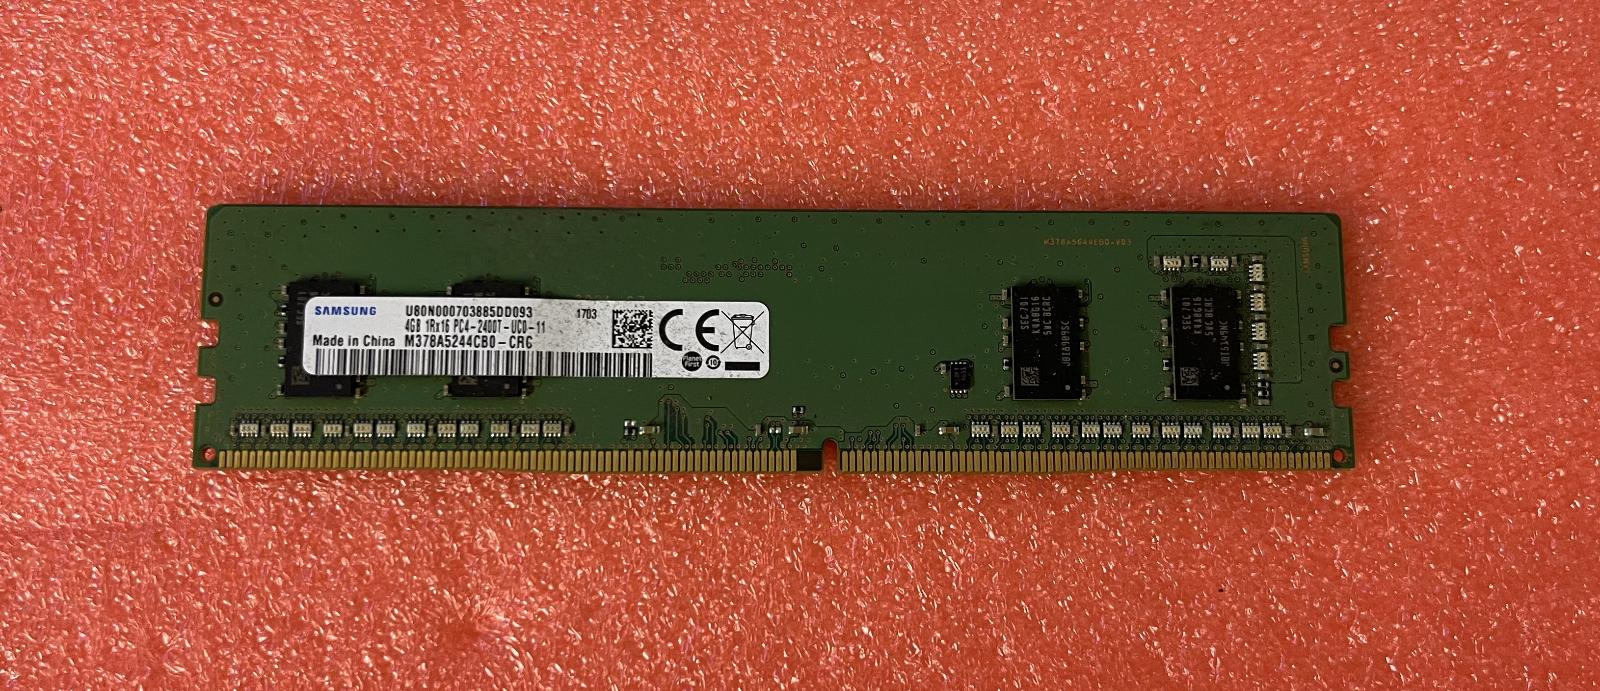 SAMSUNG DDR4 4GB 2400MHz CL17 (M378A5244CB0-CRC) - Počítače a hry